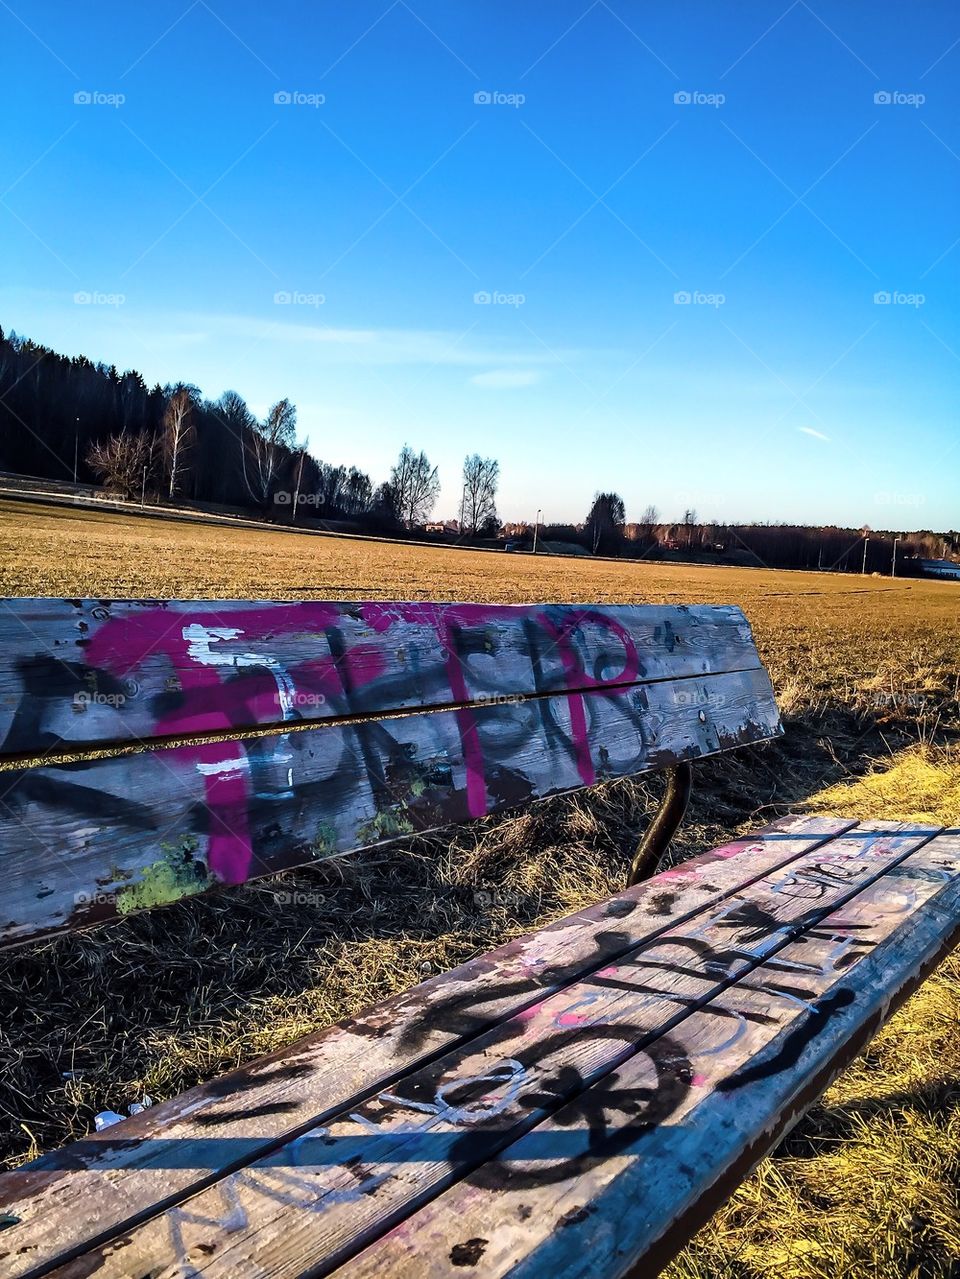 Graffiti in Sweden